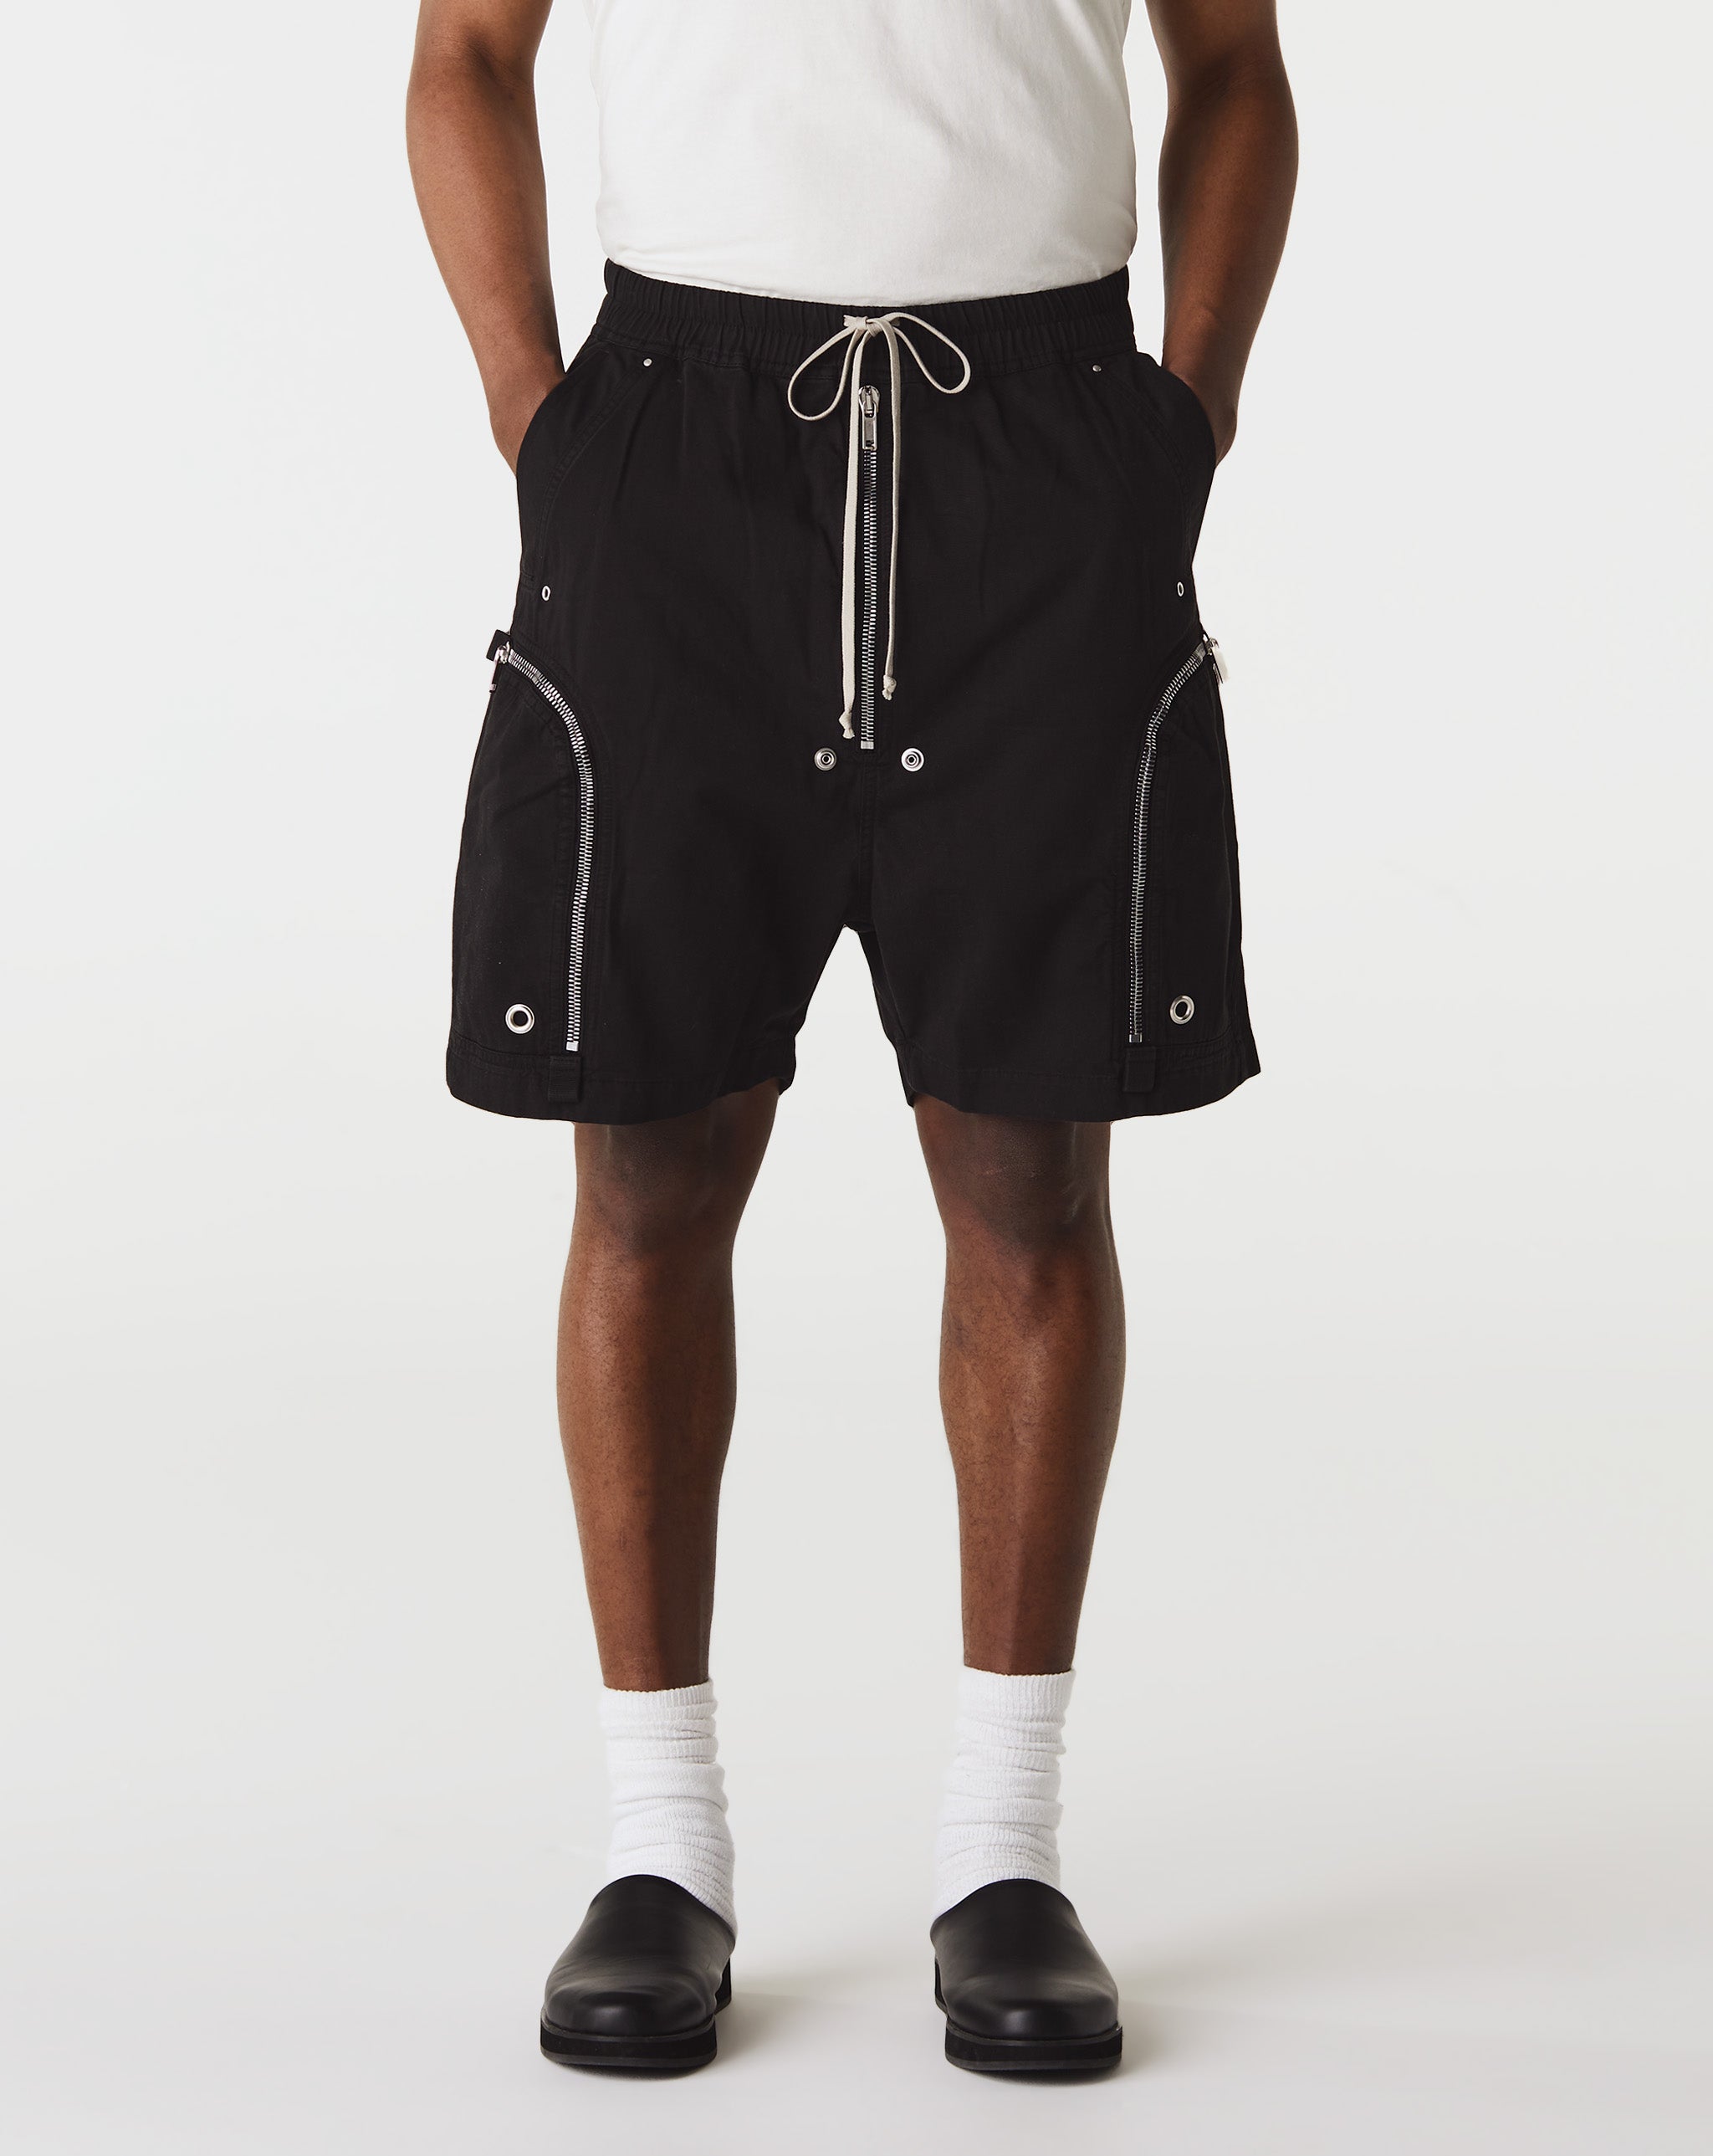 Who Decides War Bauhaus Shorts  - Cheap Cerbe Jordan outlet